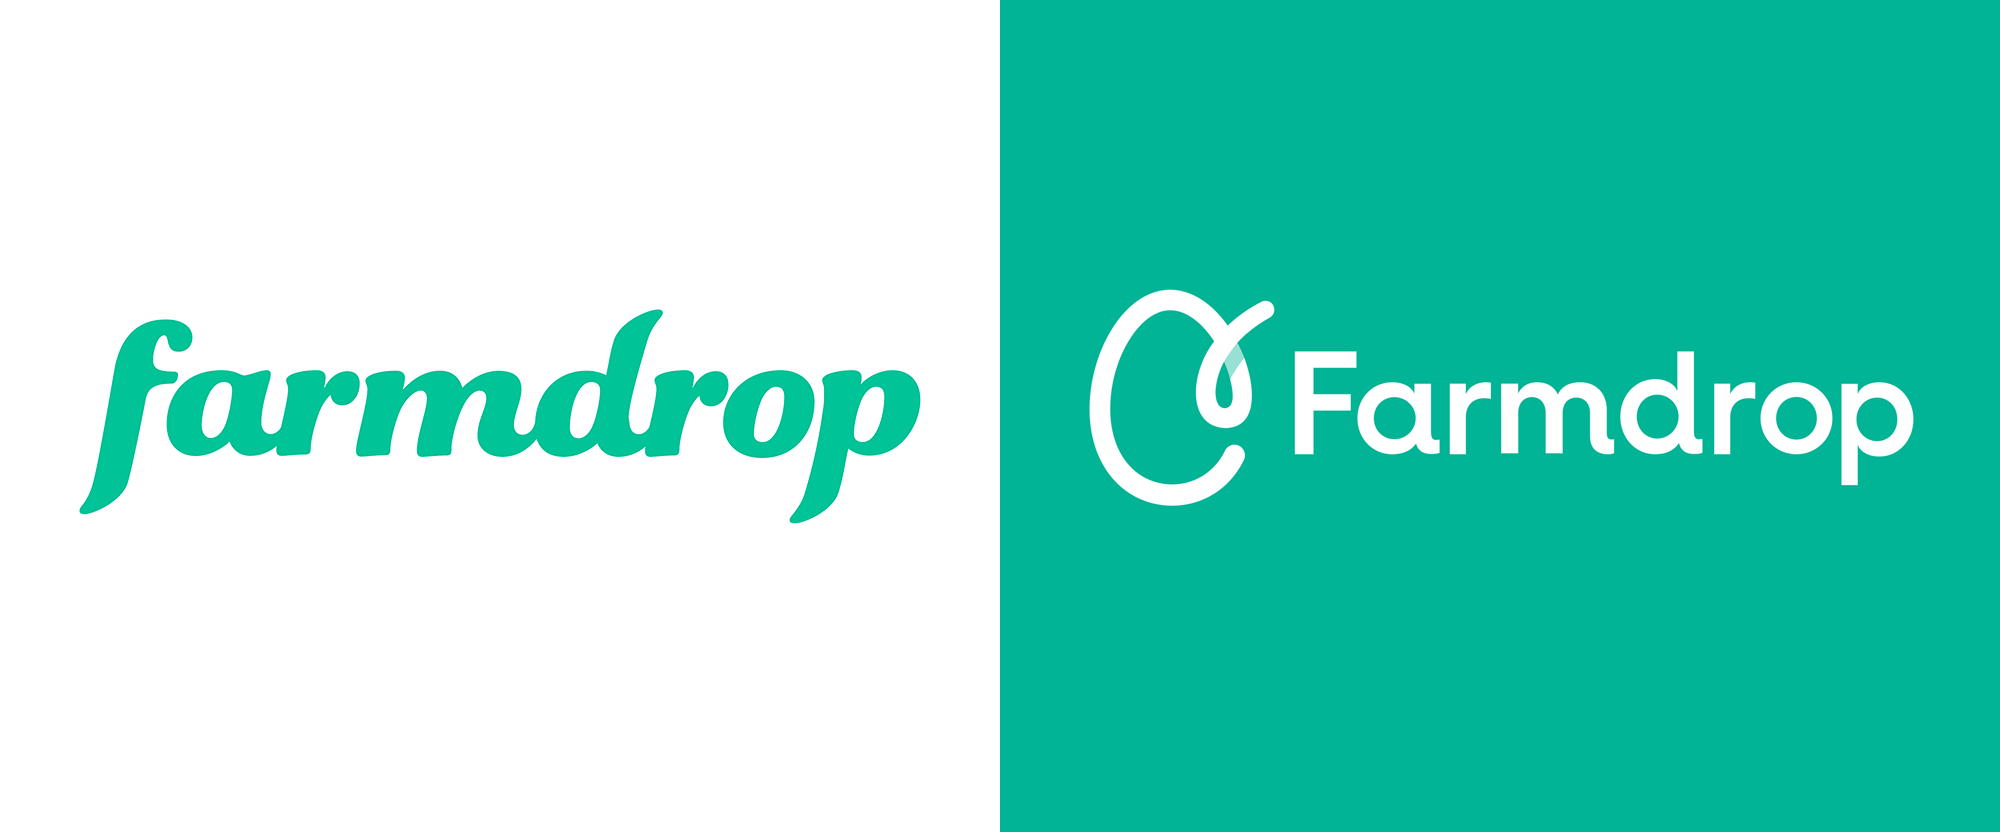 Drop Green Logo - Brand New: New Logo and Identity for Farmdrop by Confederation ...